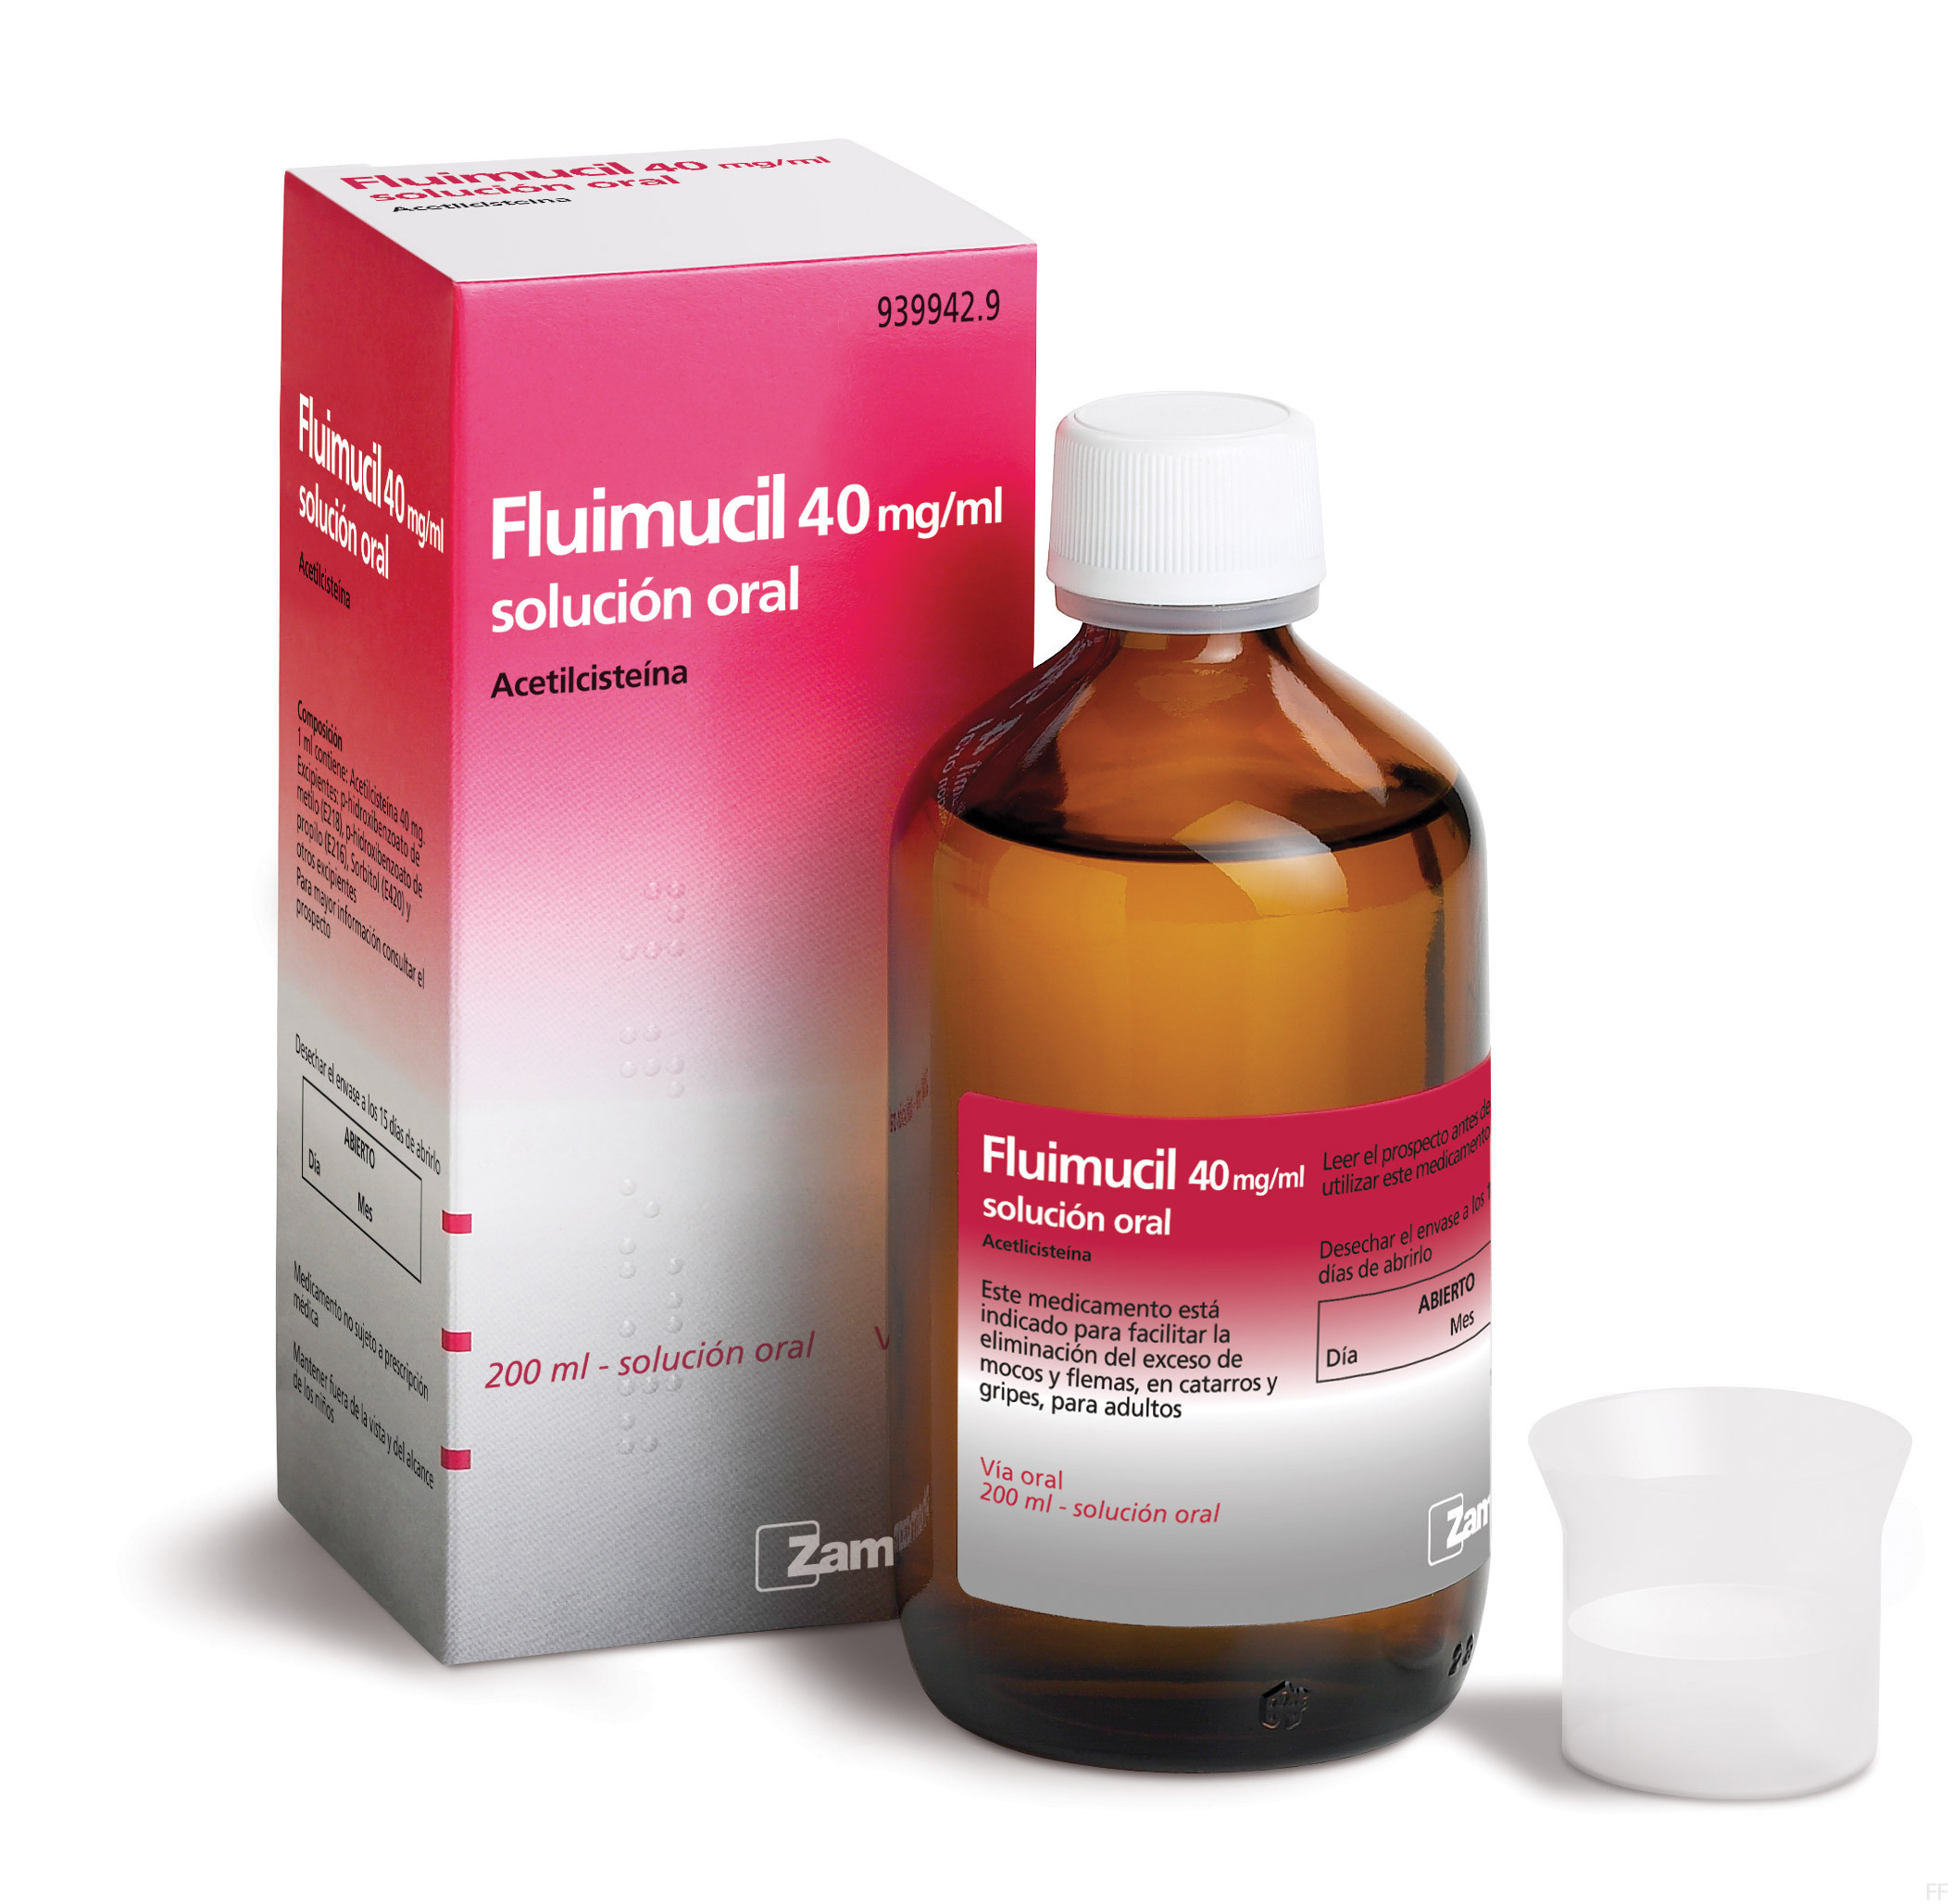 Fluimucil 40 mg